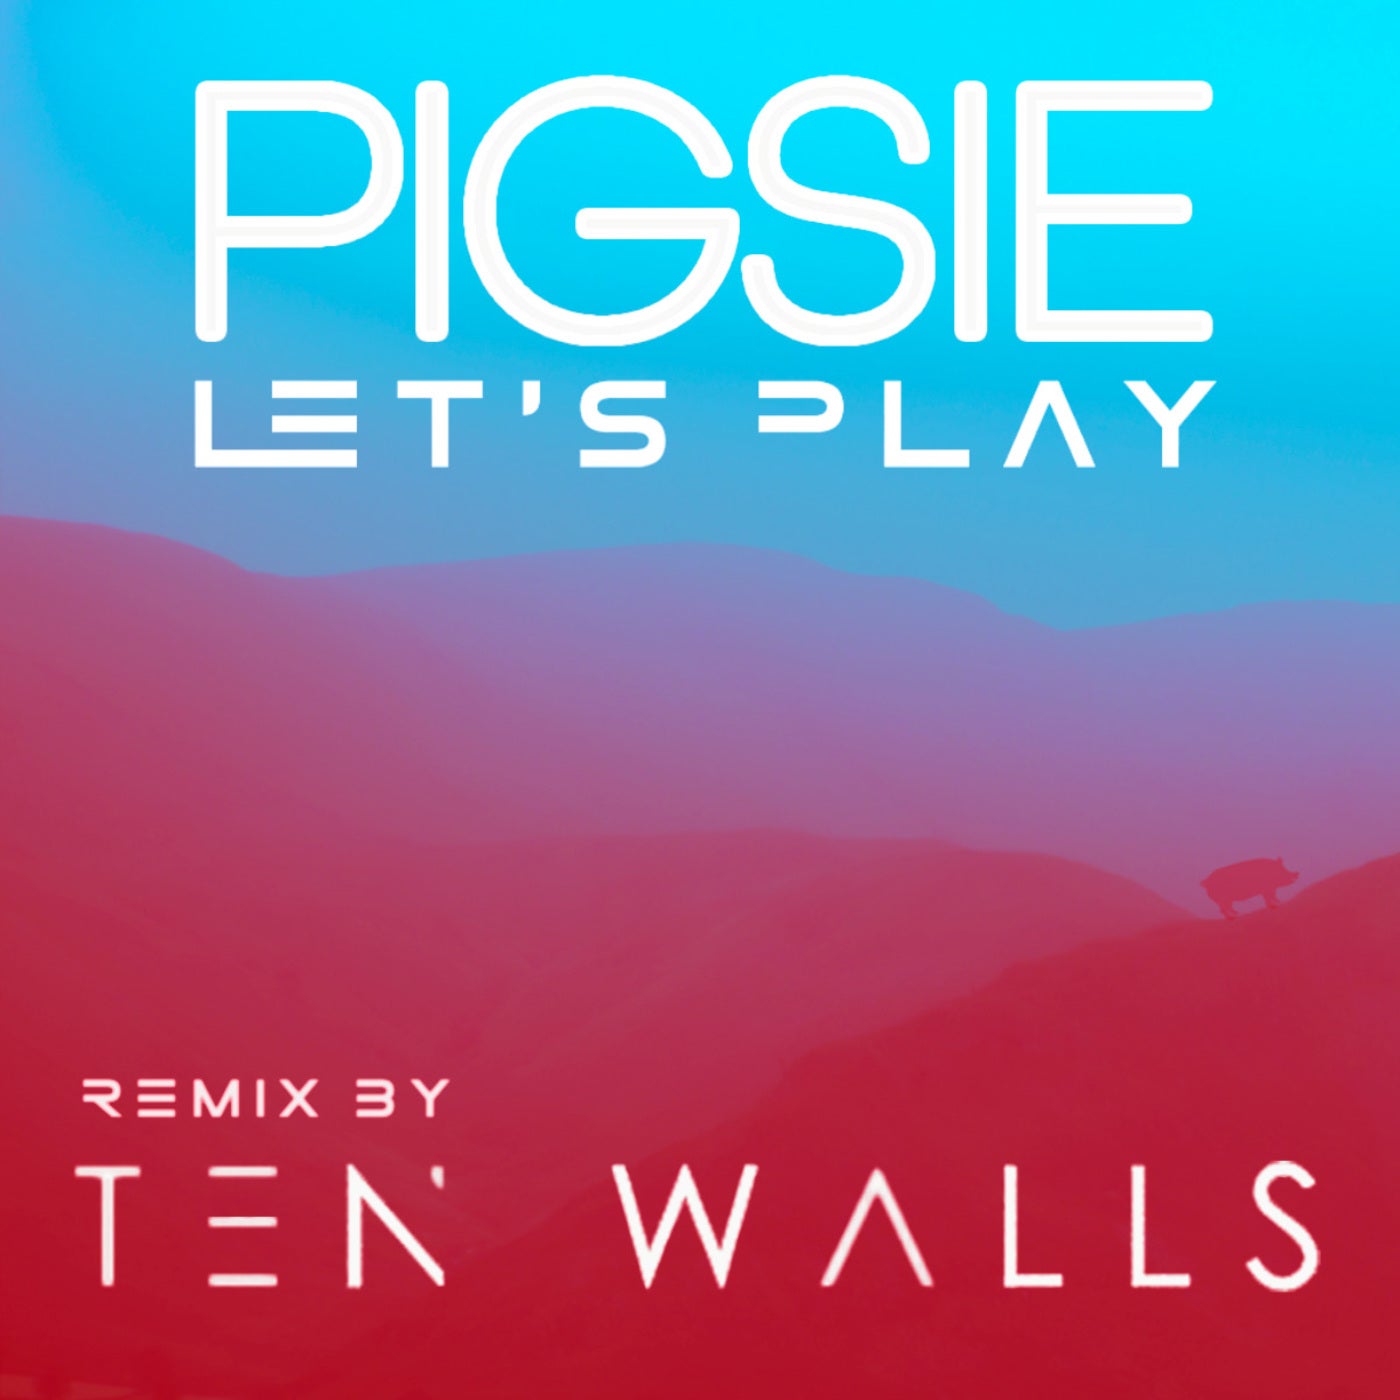 Let's Play (Ten Walls Remix)